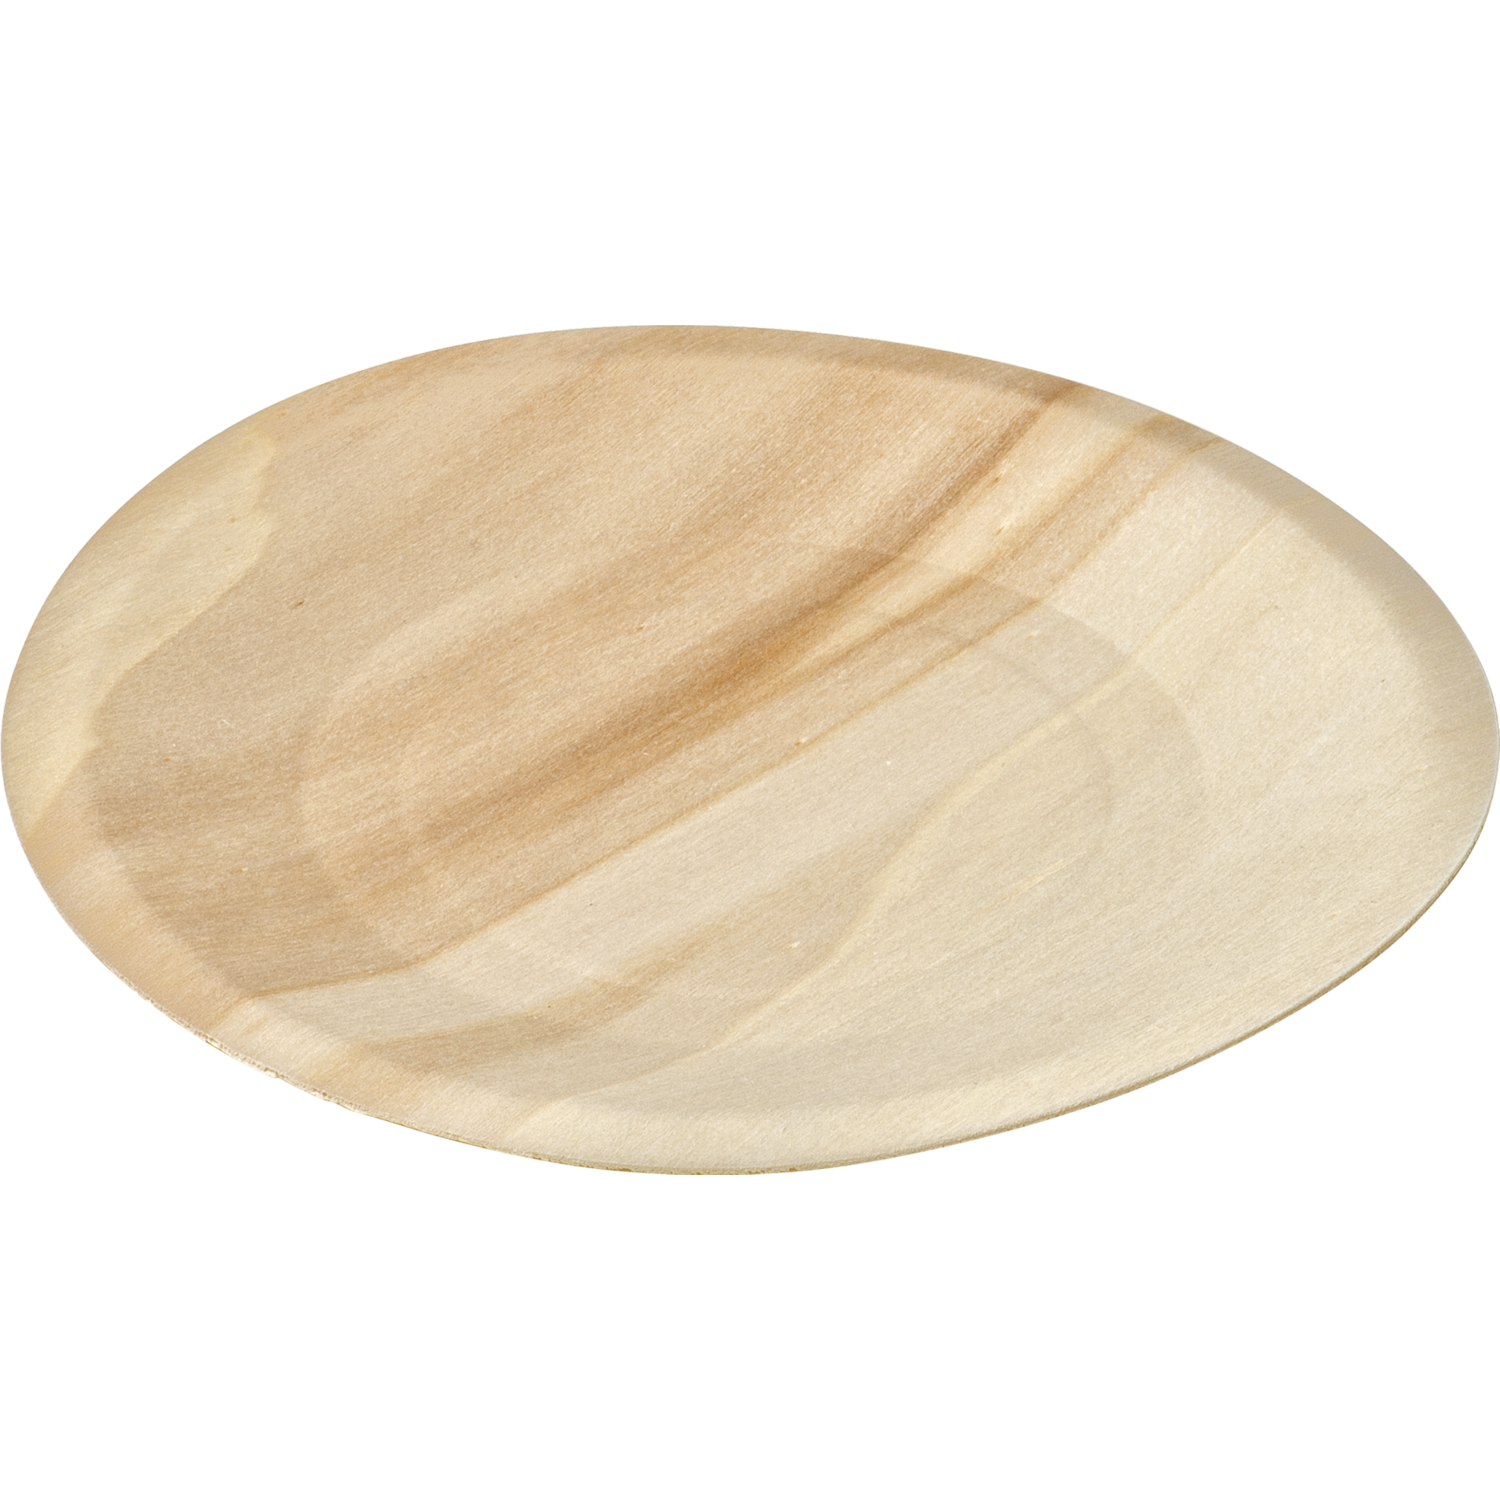 Biodore Plate, round, wood, Ø200mm, natural 1